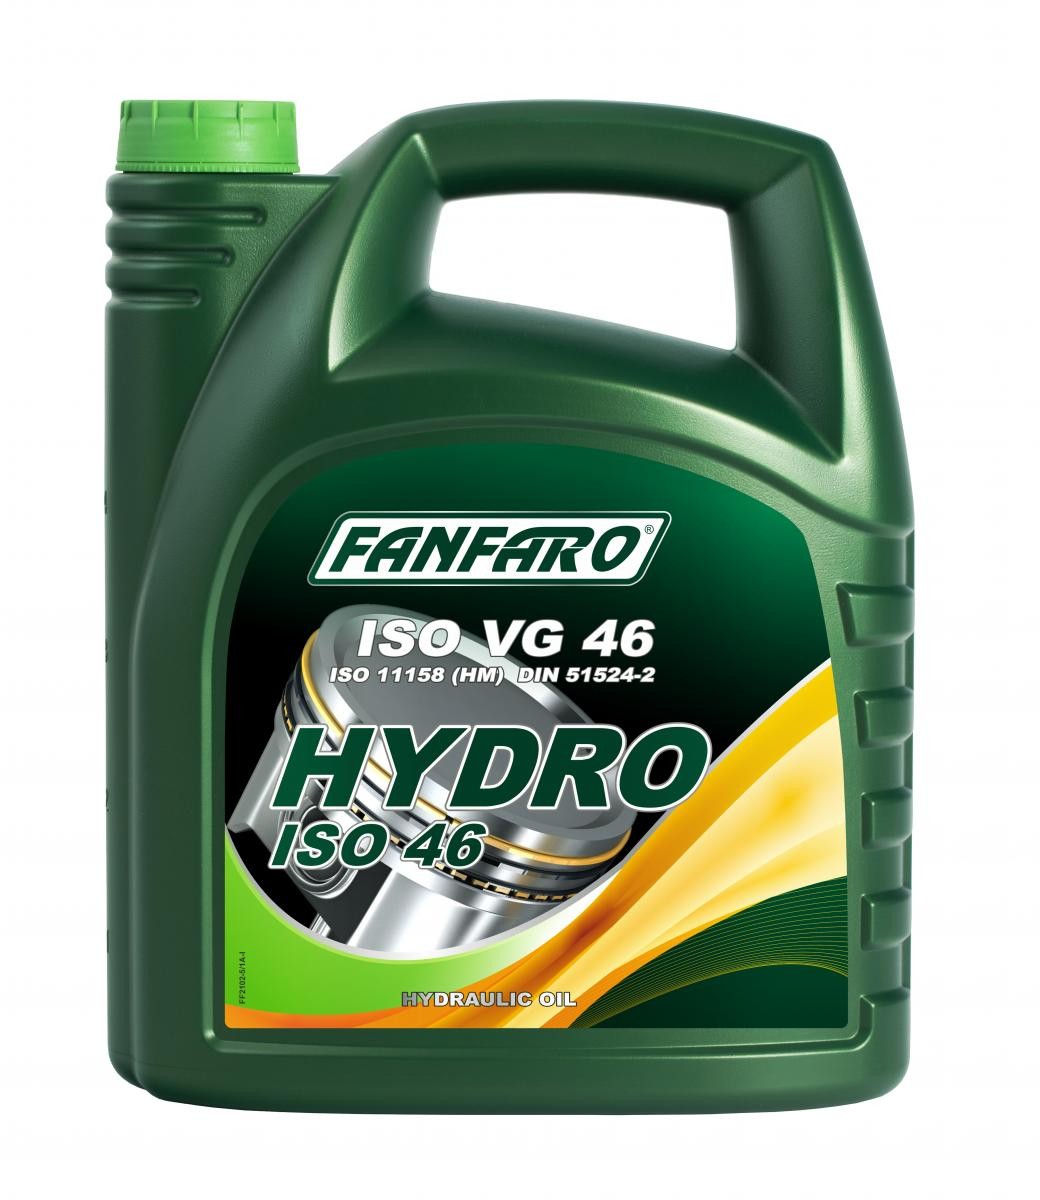 FANFARO Hydro, ISO 46 Inhalt: 5l DIN 51524-2 HLP, ISO 11158, ISO VG 46 Hydrauliköl FF2102-5 kaufen